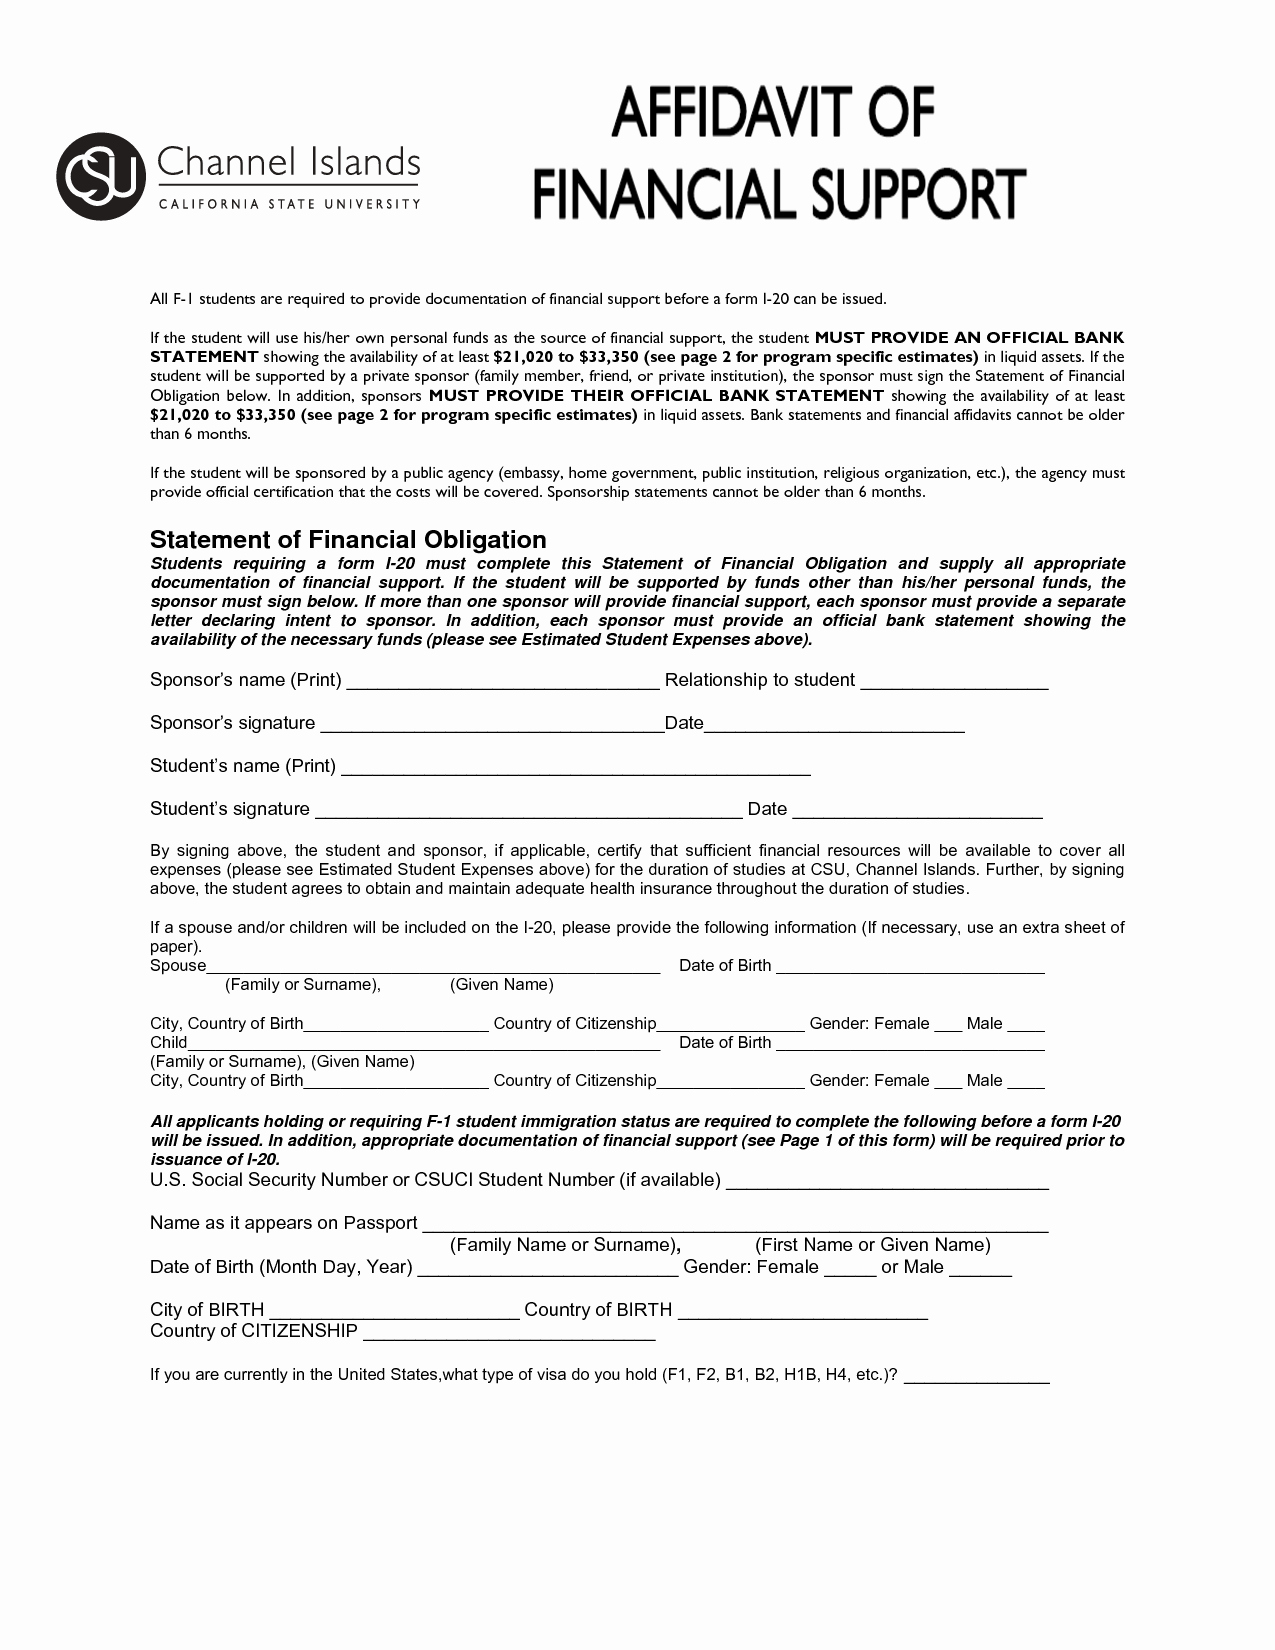 Affidavit Of Support Letter Sample Best Of Search Results Affidavit Of Financial Support Letter